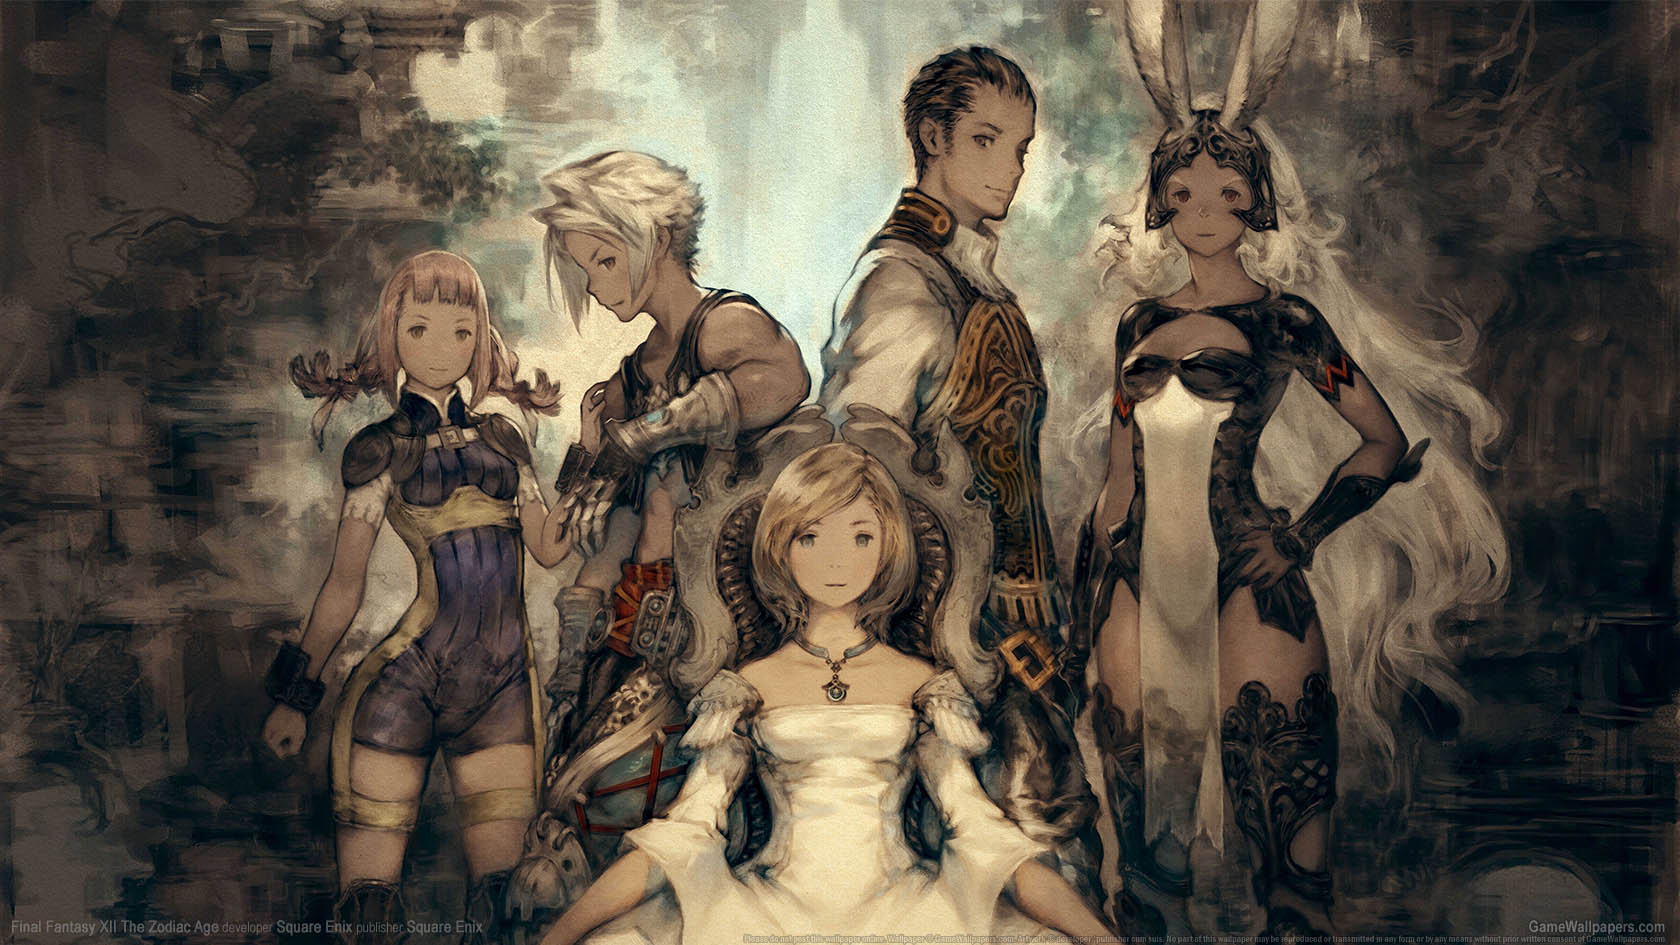 Final Fantasy XII The Zodiac Age achtergrond 01 1680x945